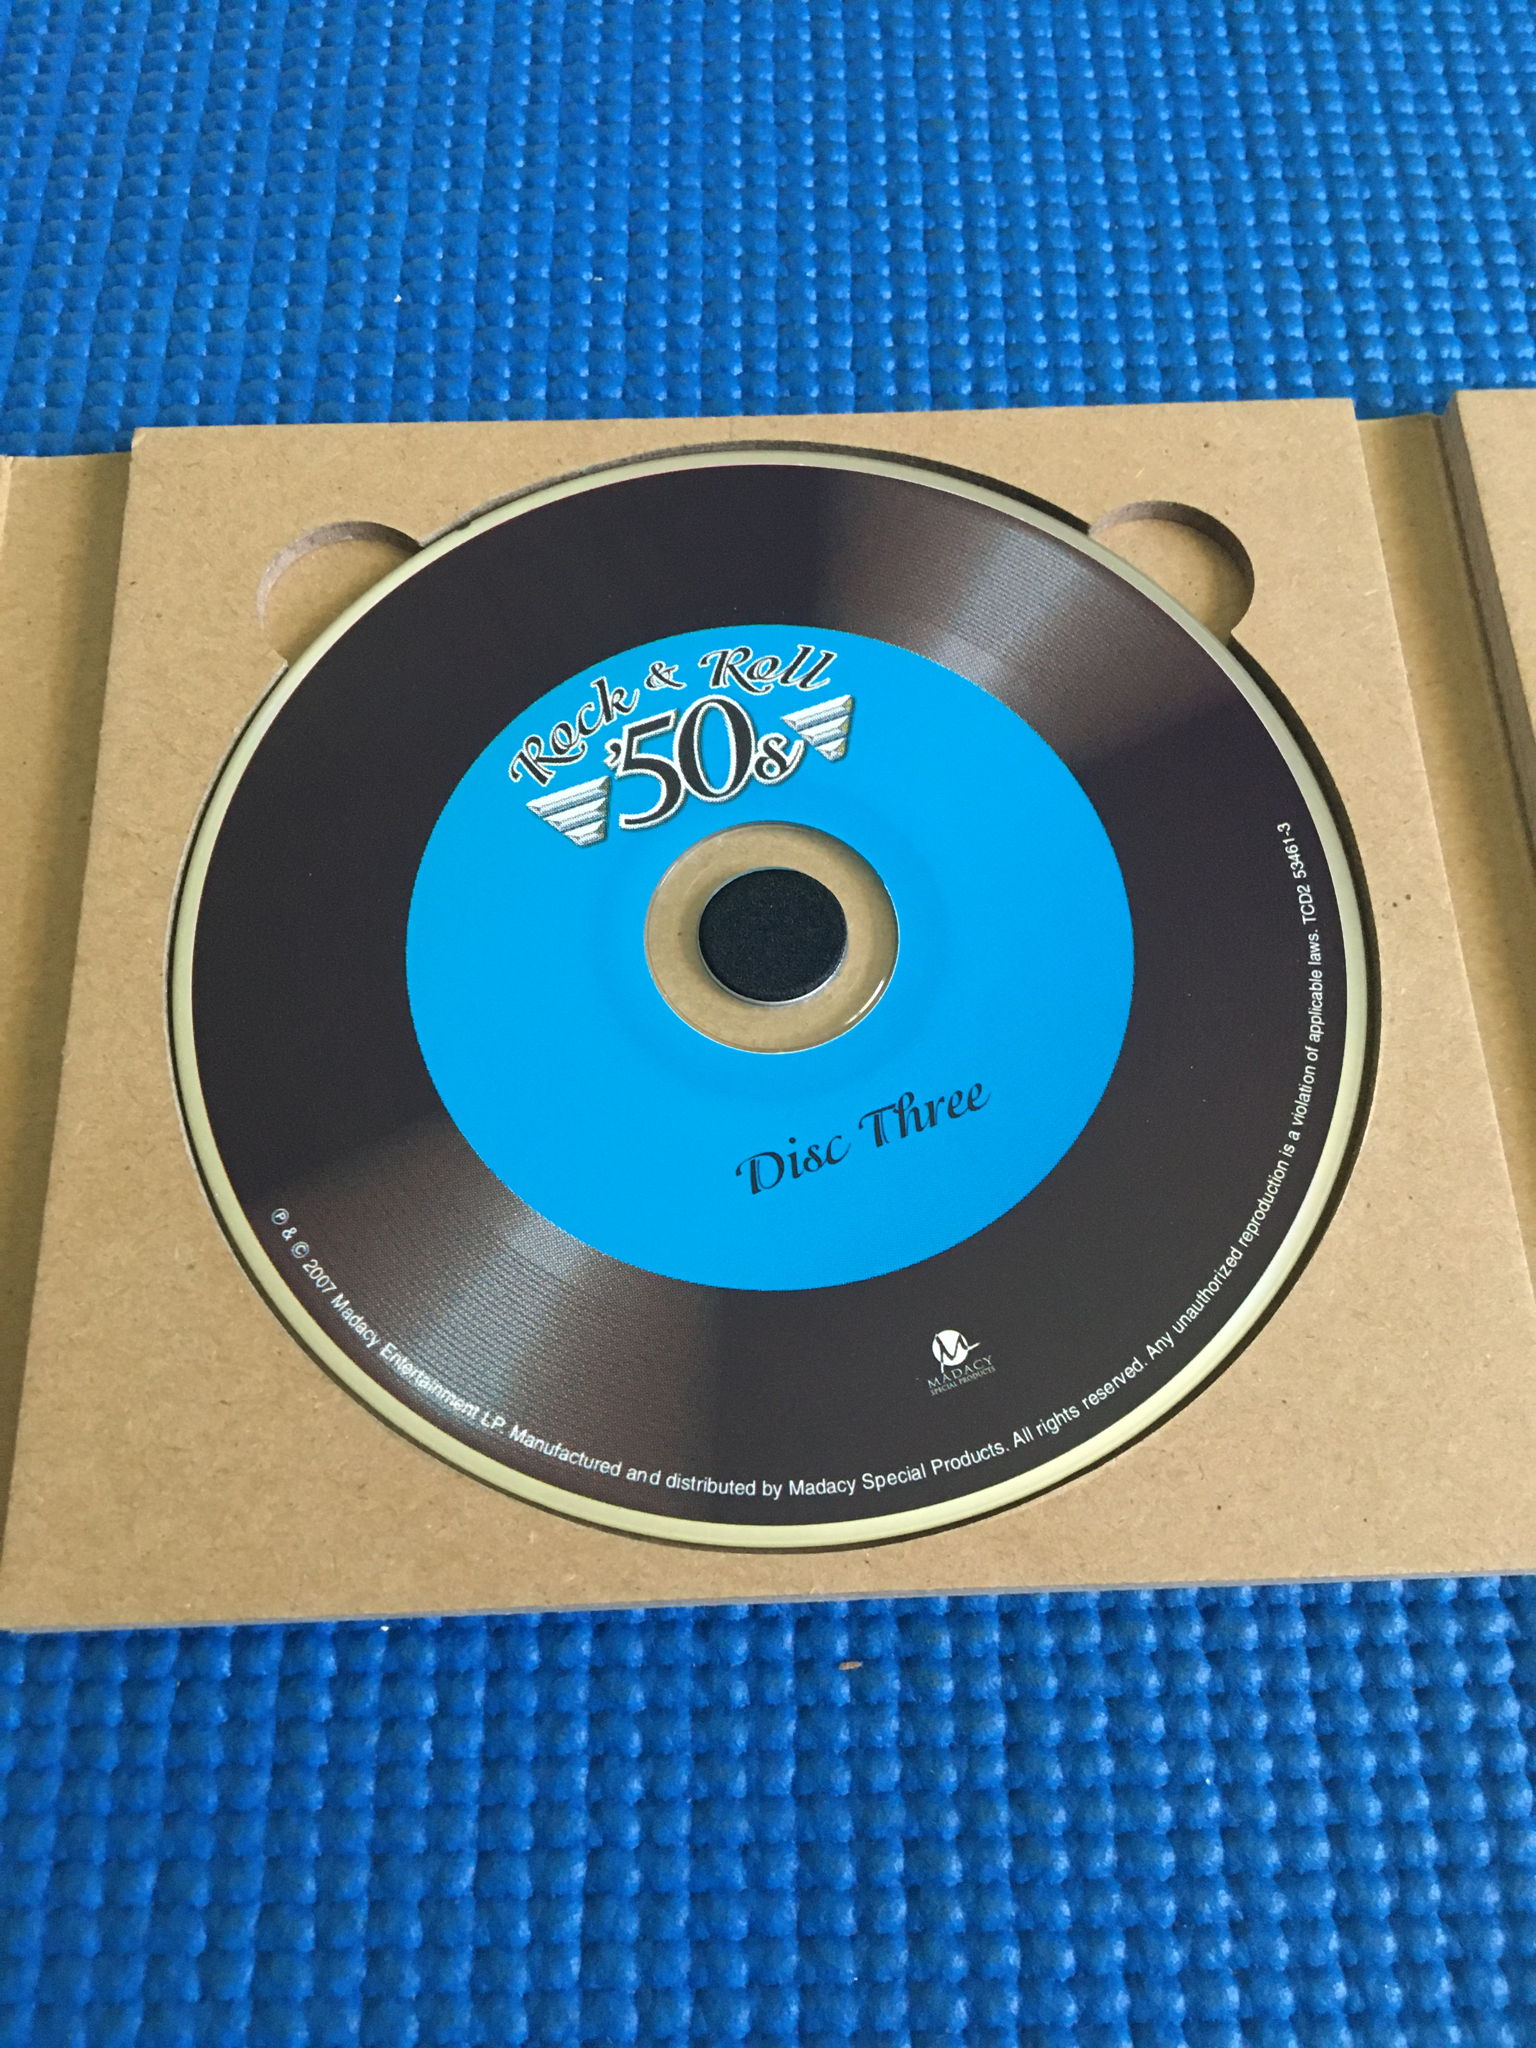 Madacy rock & roll 50s  Triple cd set 2008 4